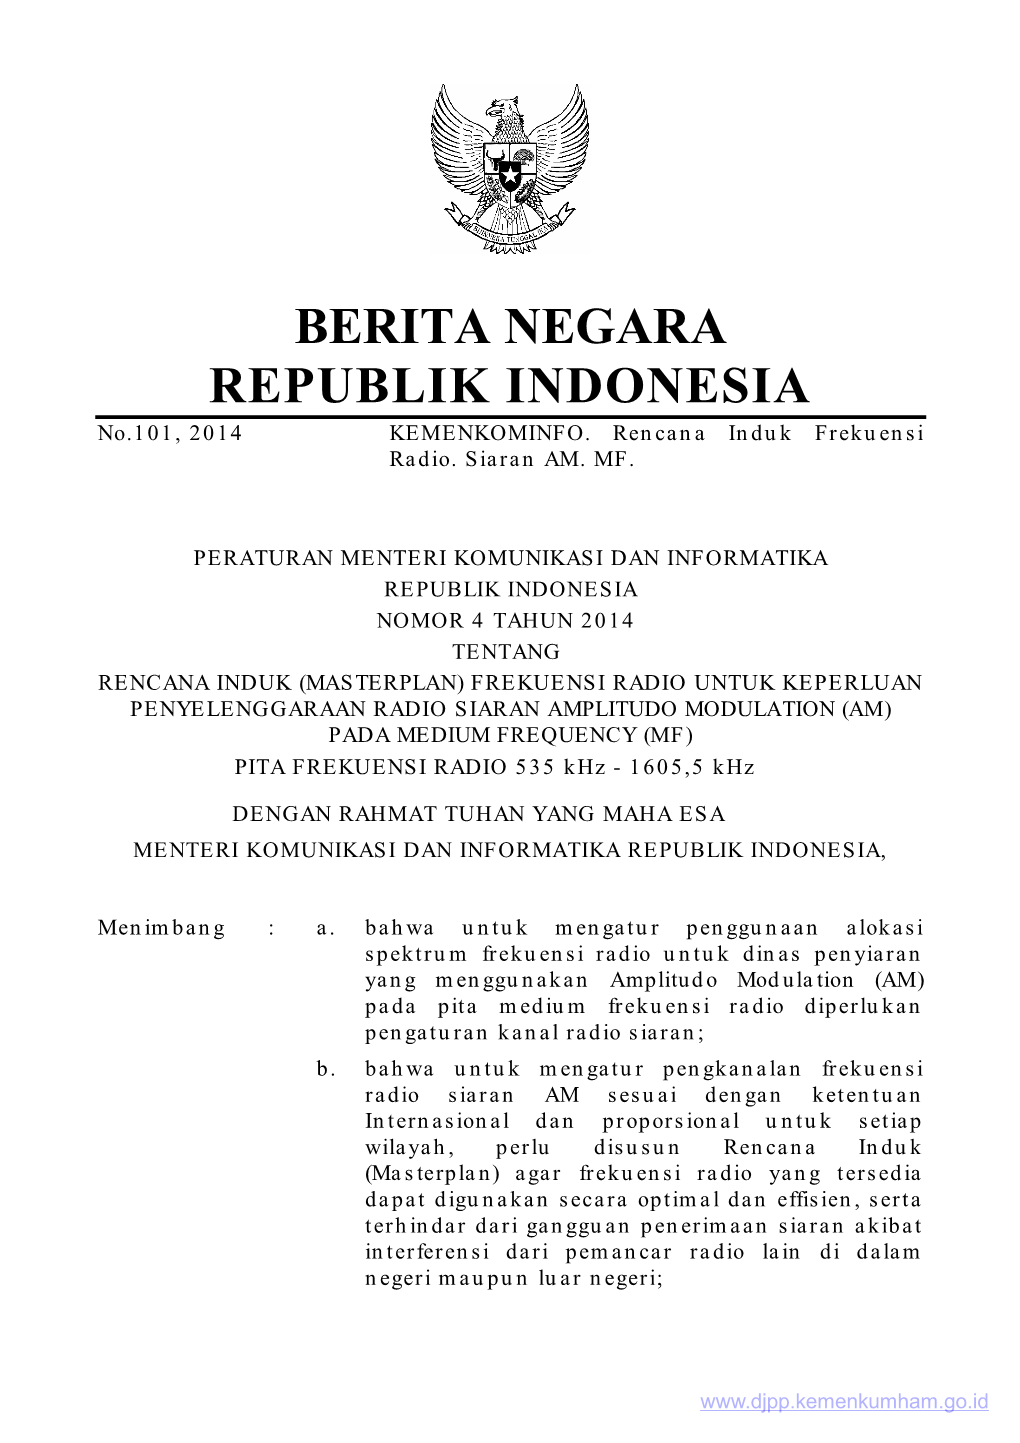 BERITA NEGARA REPUBLIK INDONESIA No.101, 2014 KEMENKOMINFO